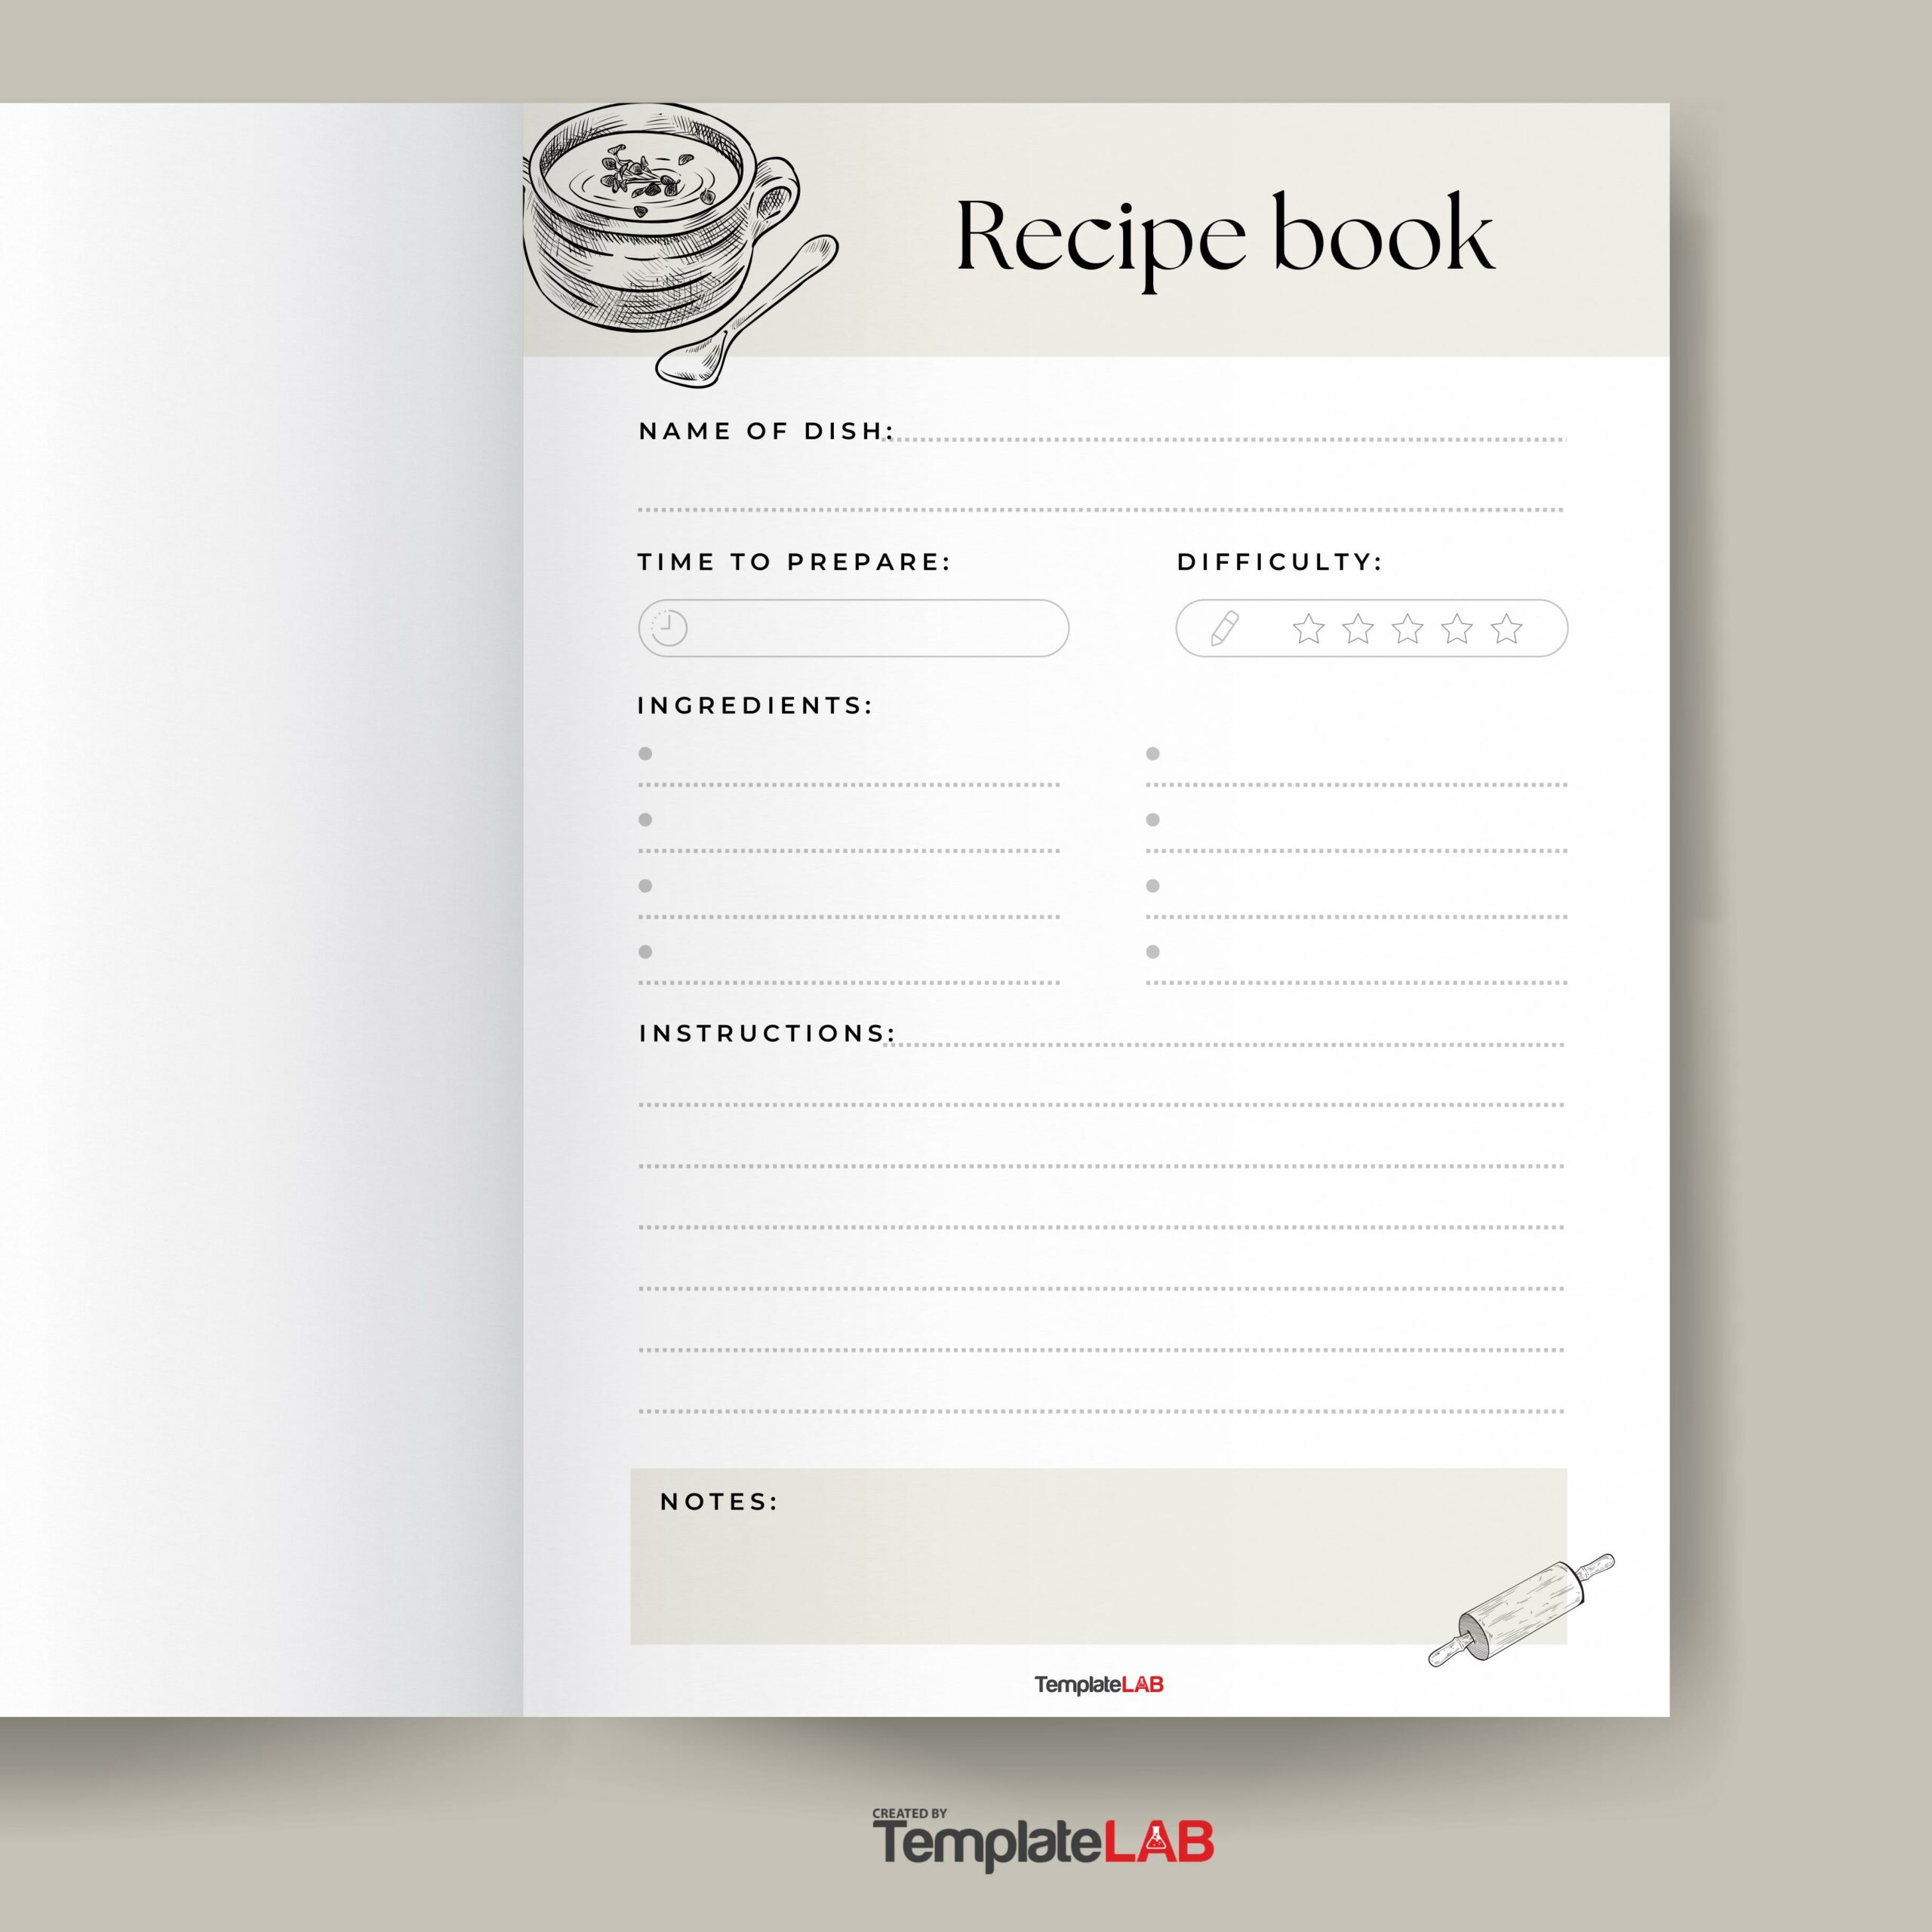 Recipe Book to Write in Your Own Recipes, Recipe Scrapbook, Blank